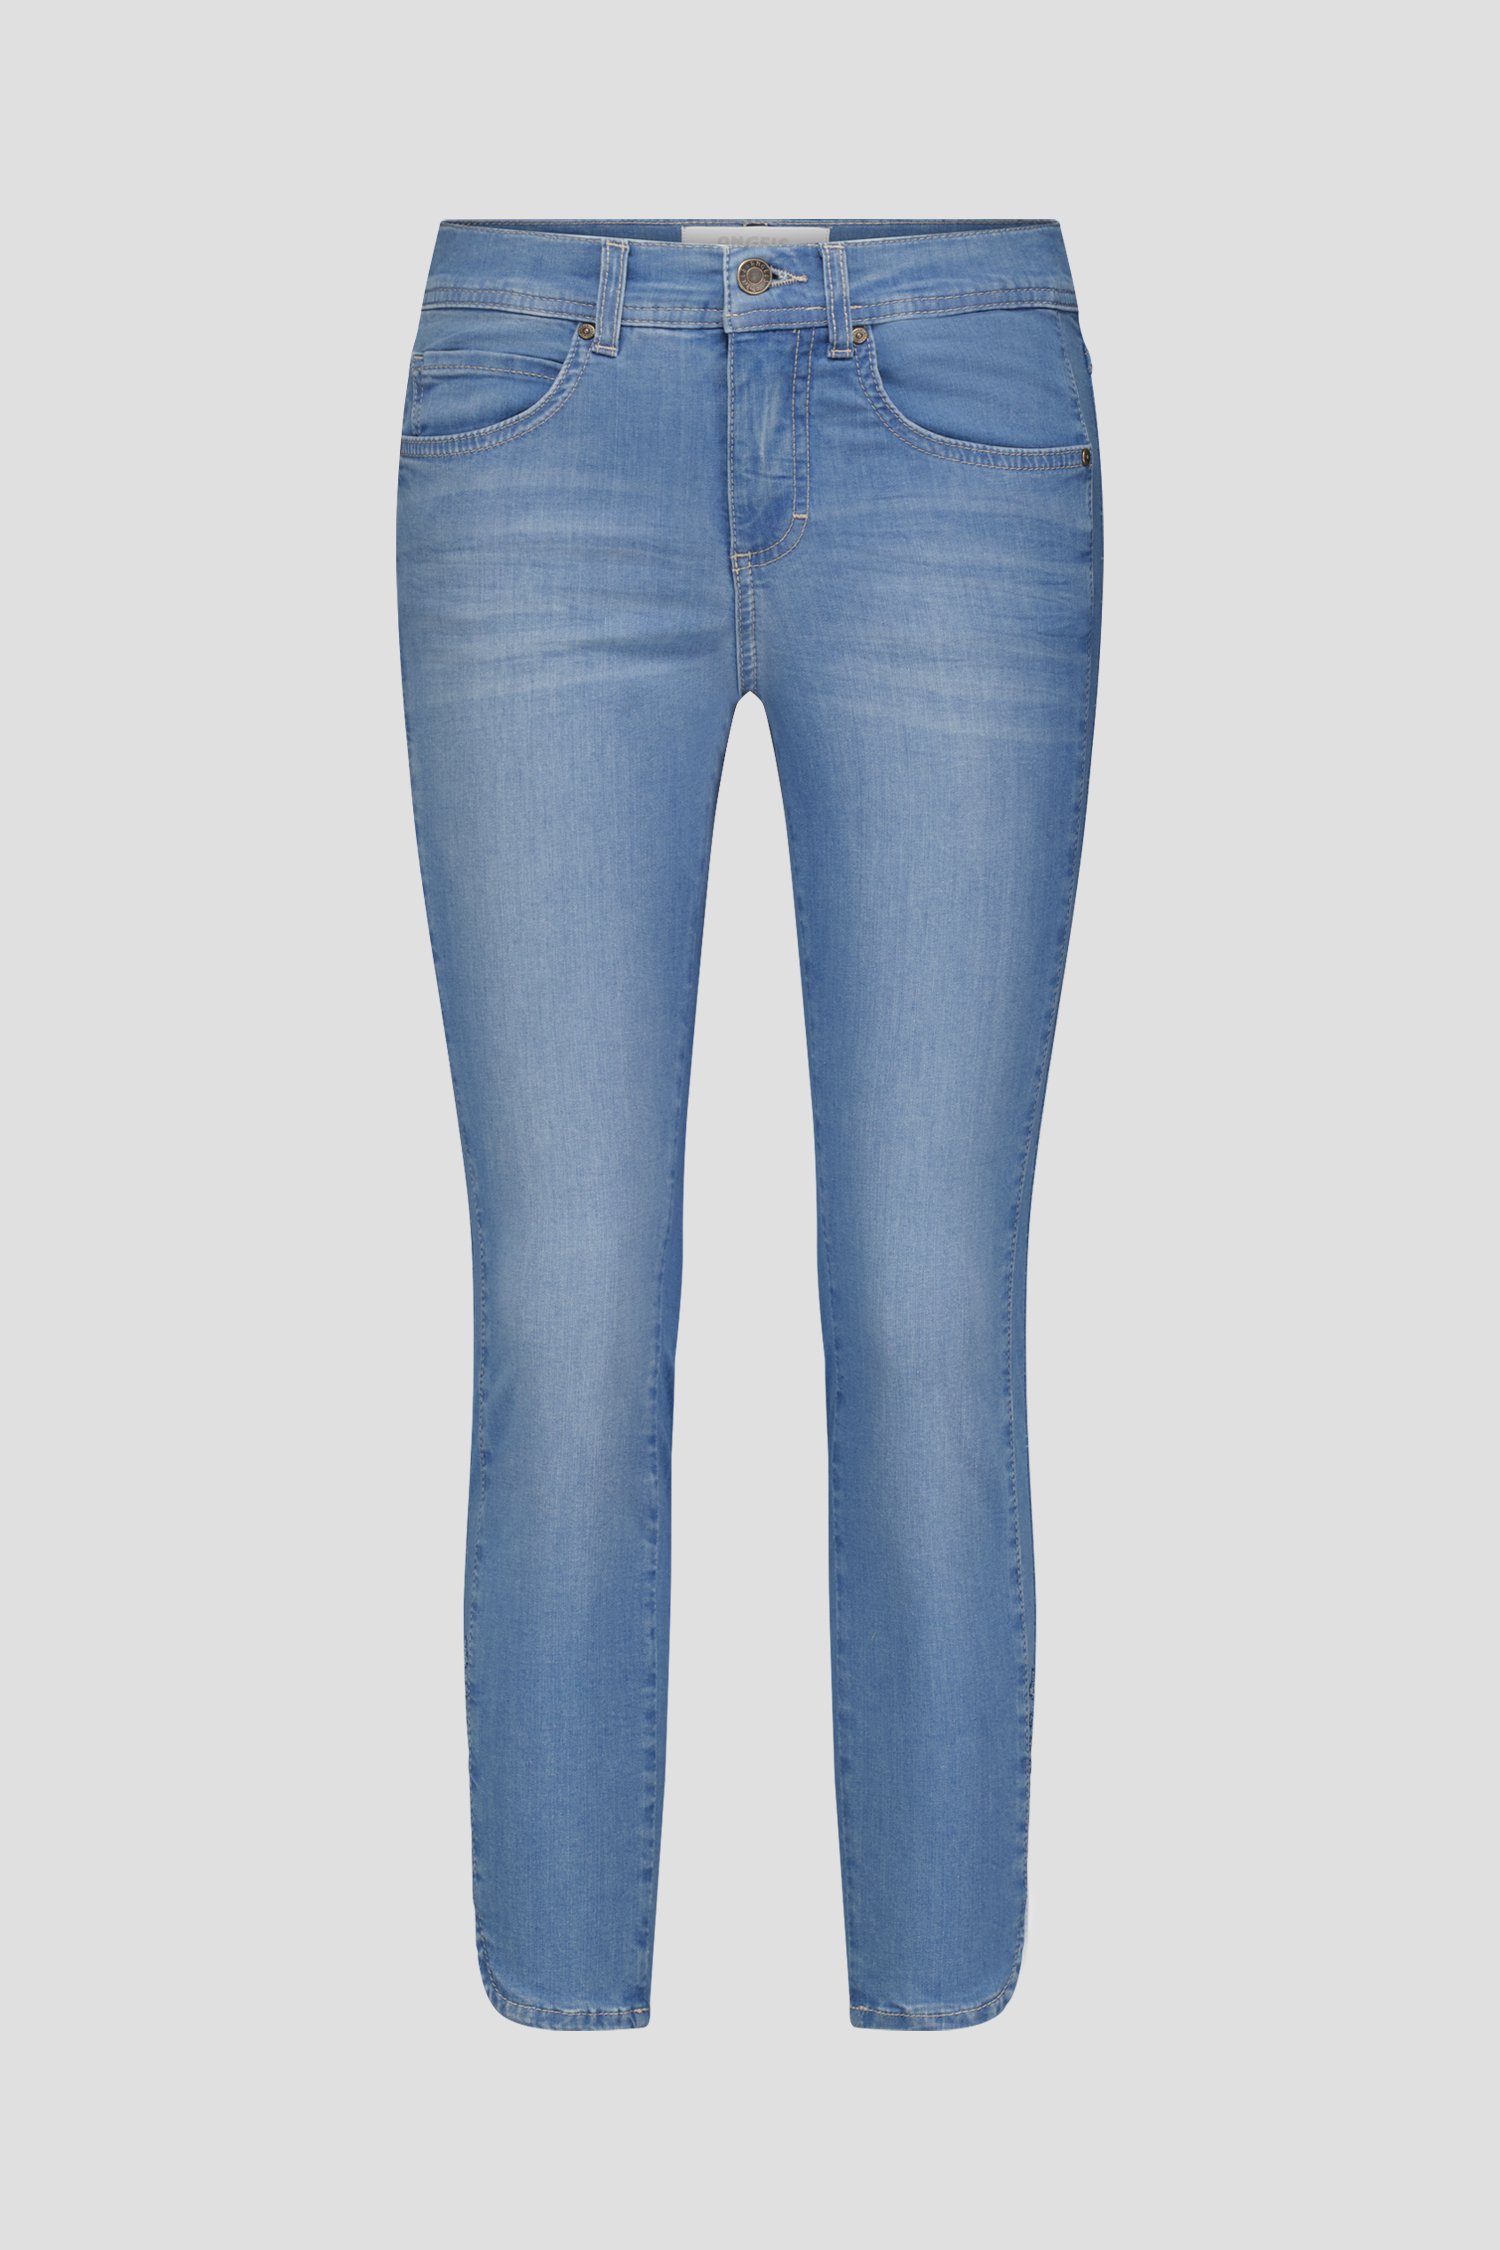 Lichtblauwe jeans met 7/8 lengte - Slim fit  van Angels voor Dames